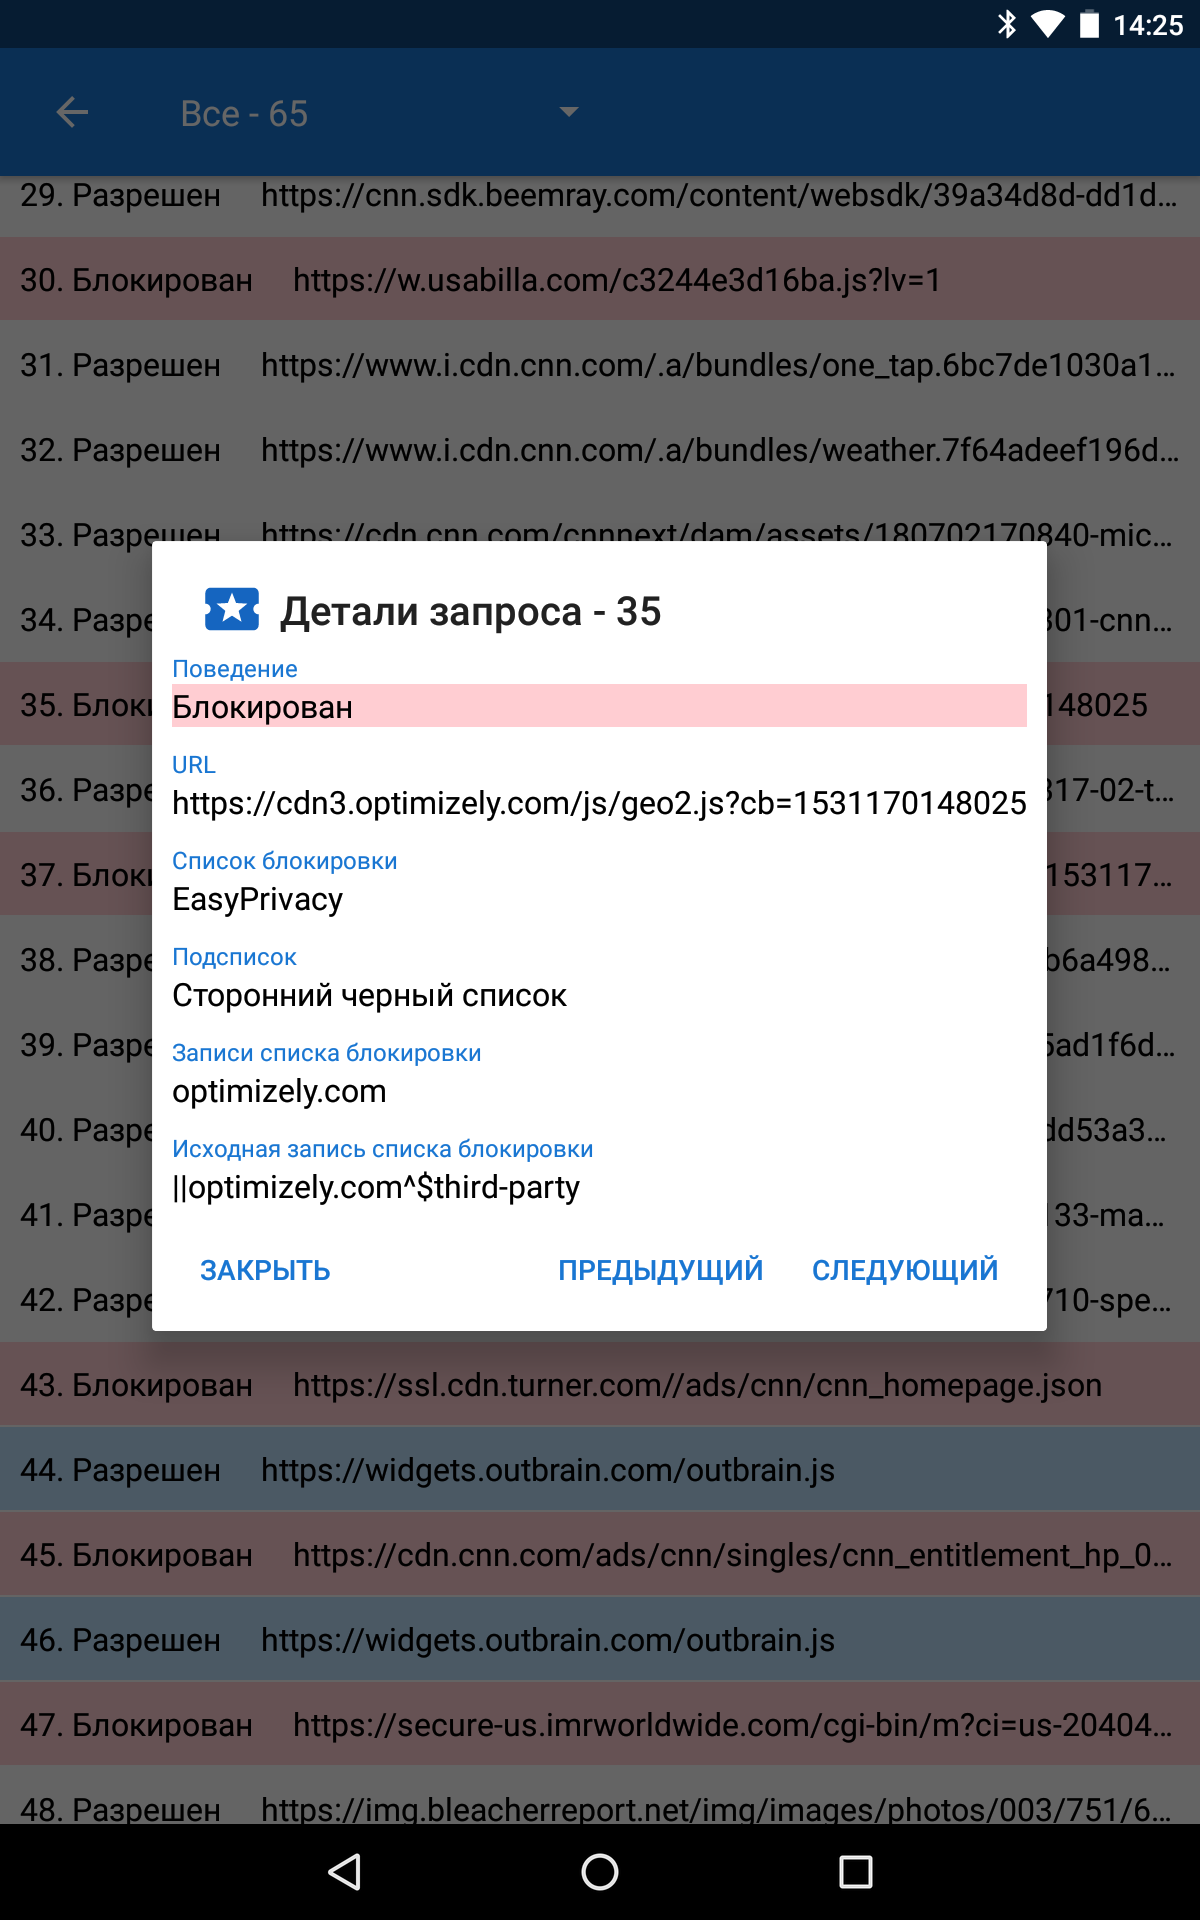 fastlane/metadata/android/ru-RU/images/sevenInchScreenshots/06-RequestDetails.png